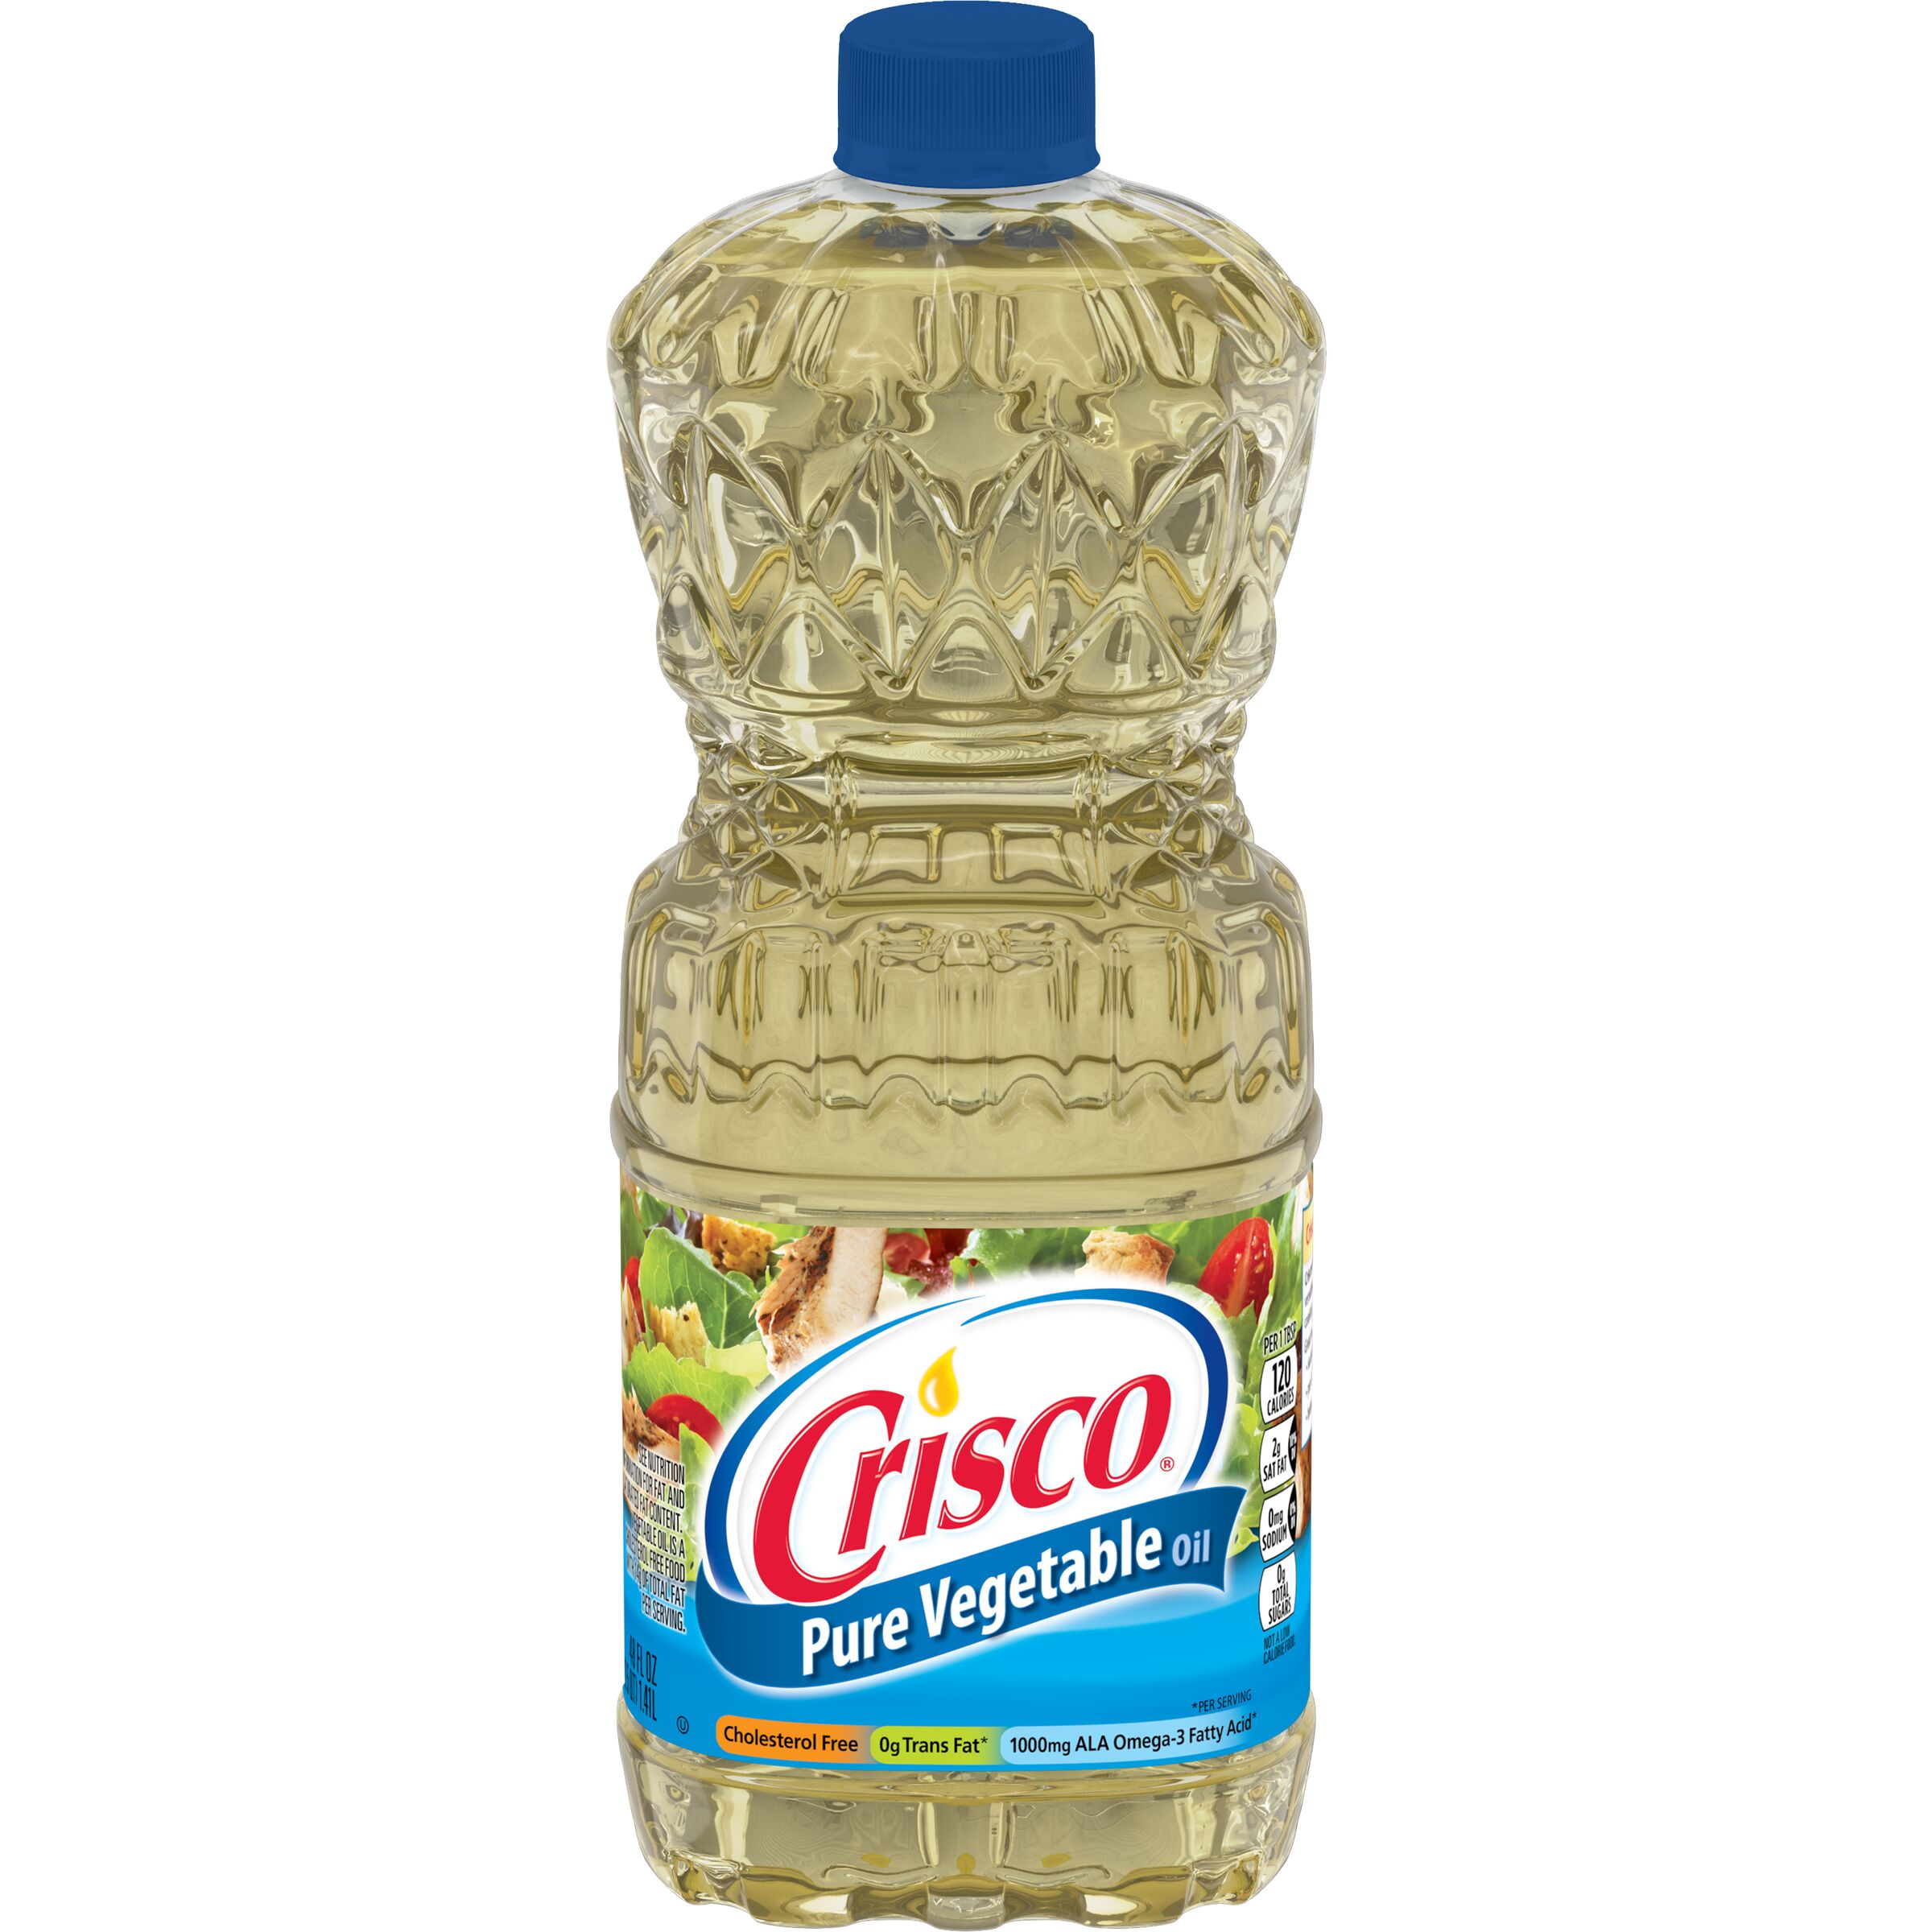 Crisco Pure Vegetable Oil 48 fl. oz. Bottle - image 1 of 8